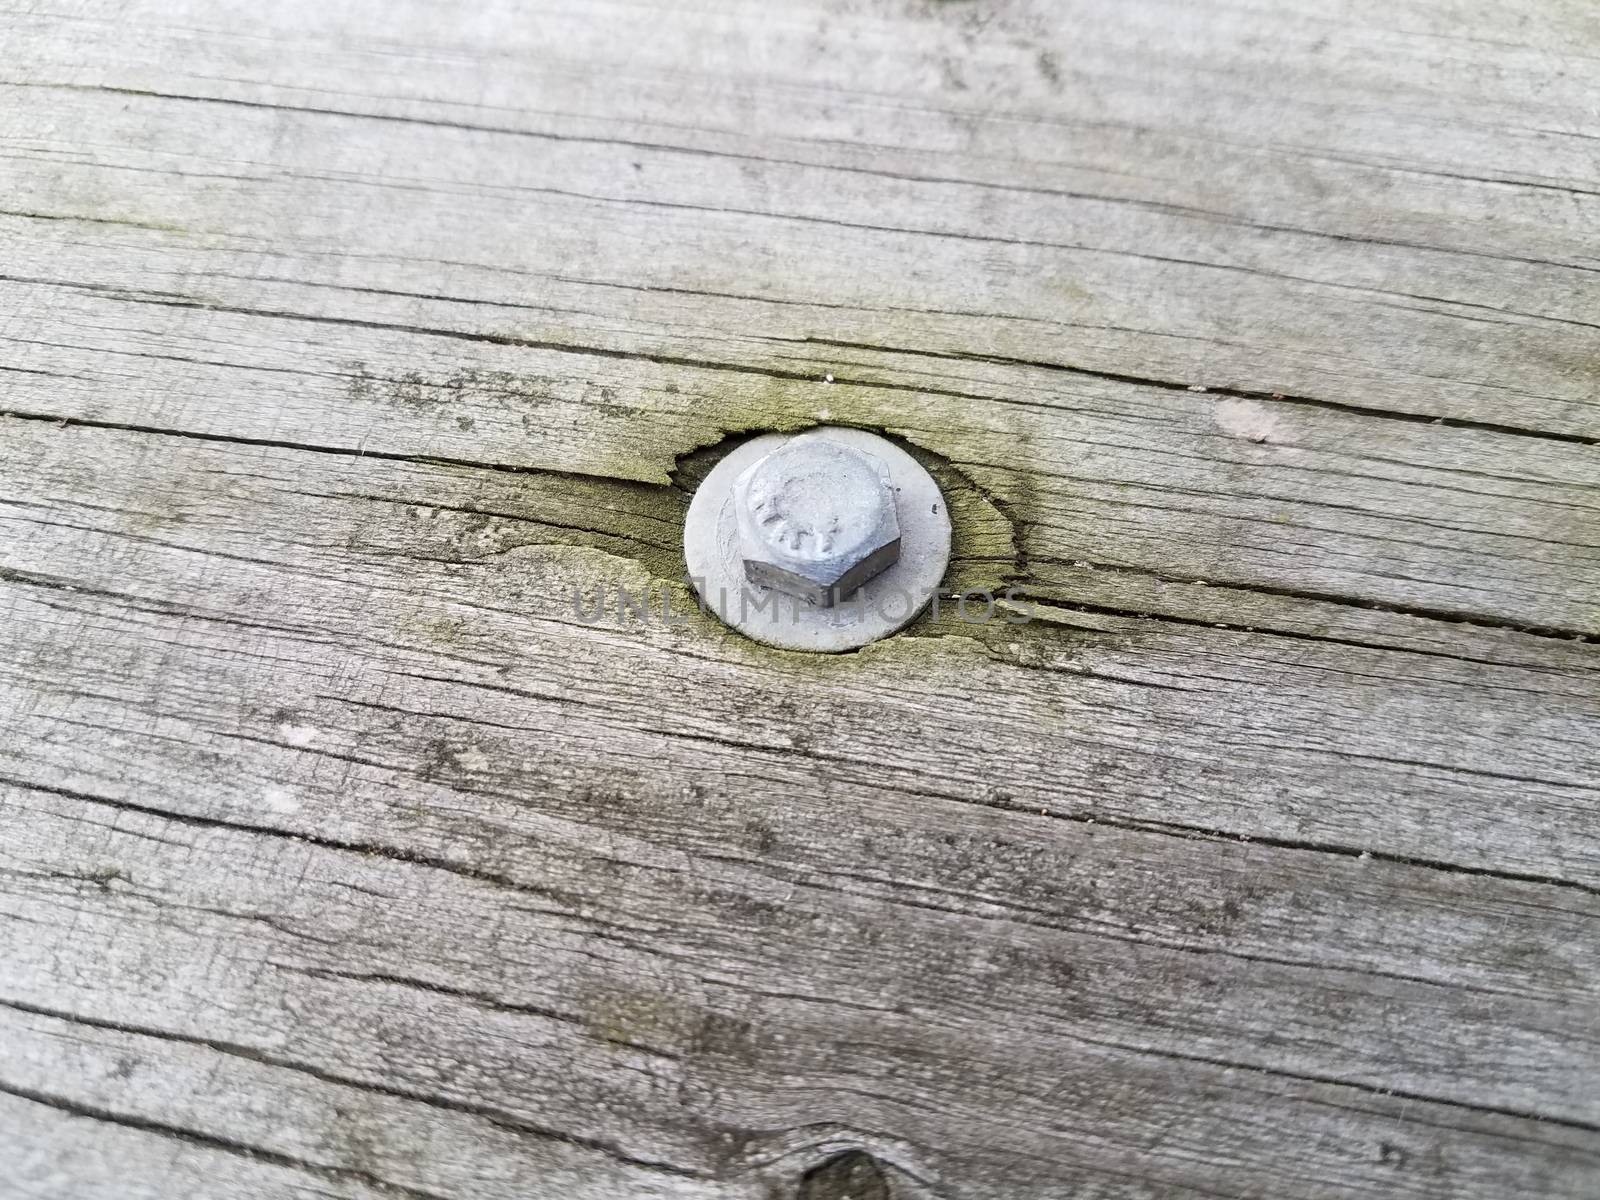 metal screw with washer in wood board by stockphotofan1